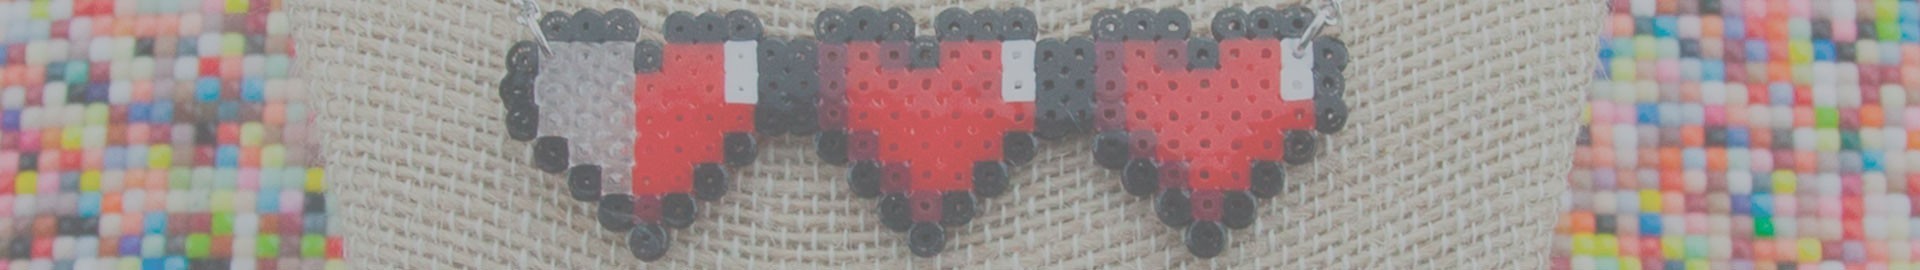 Diseños de Pixel Art con Hama Beads